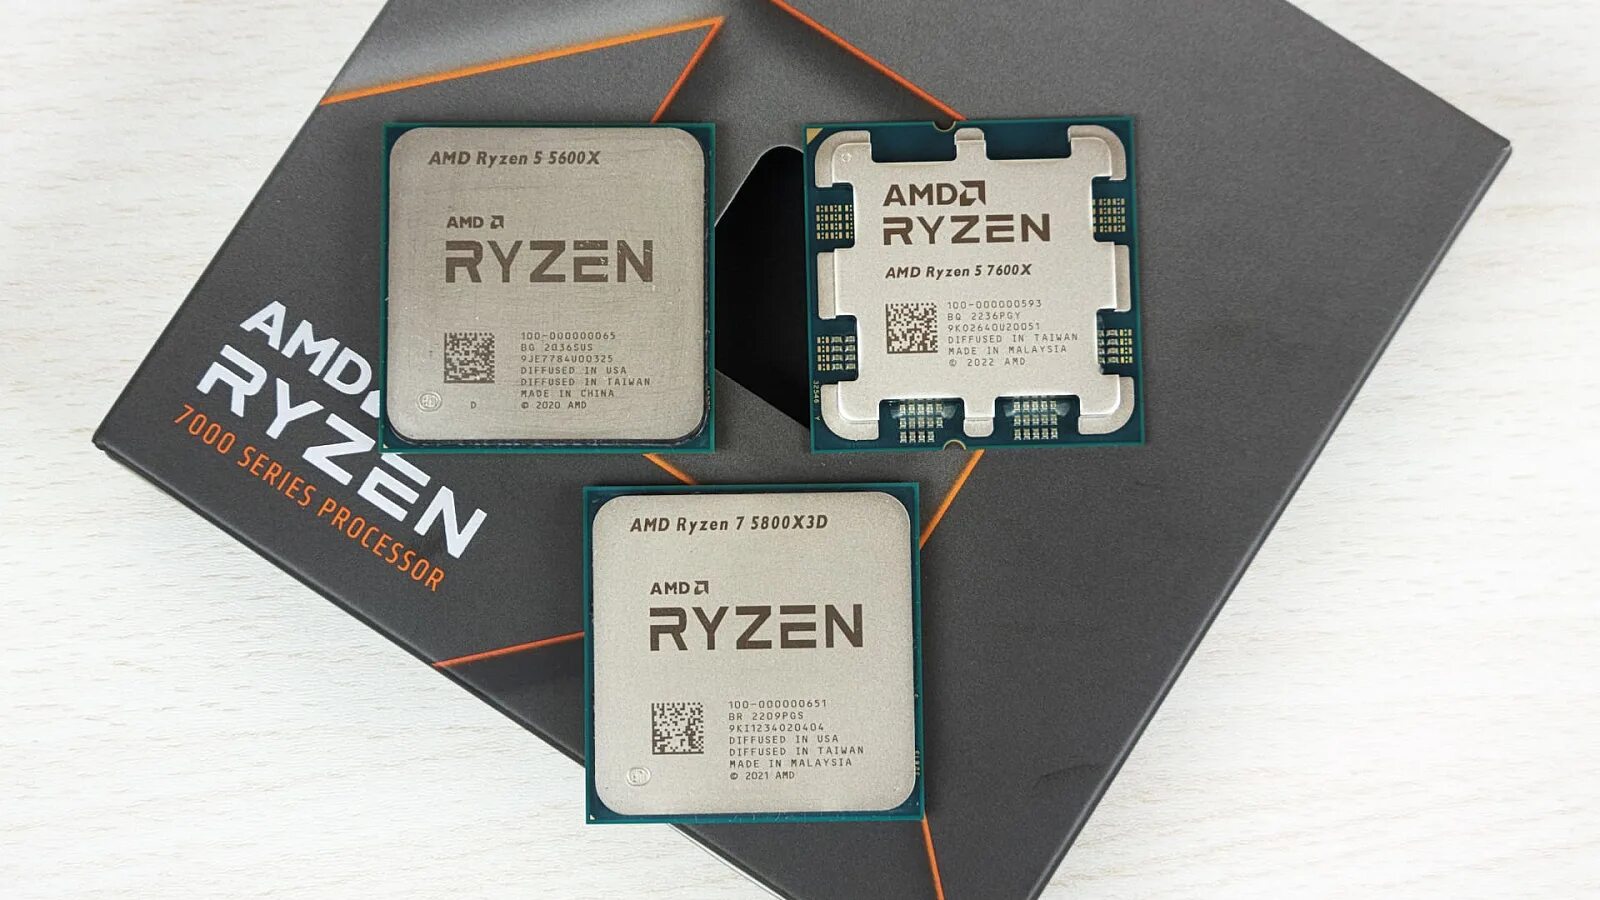 Ryzen 7600x. Ryzen 5 7600x. AMD Ryzen 5 7600x am5, 6 x 4700 МГЦ. AMD Ryzen 5 7600x 6-Core Processor 4.70 GHZ. Amd ryzen 5 7600x am5